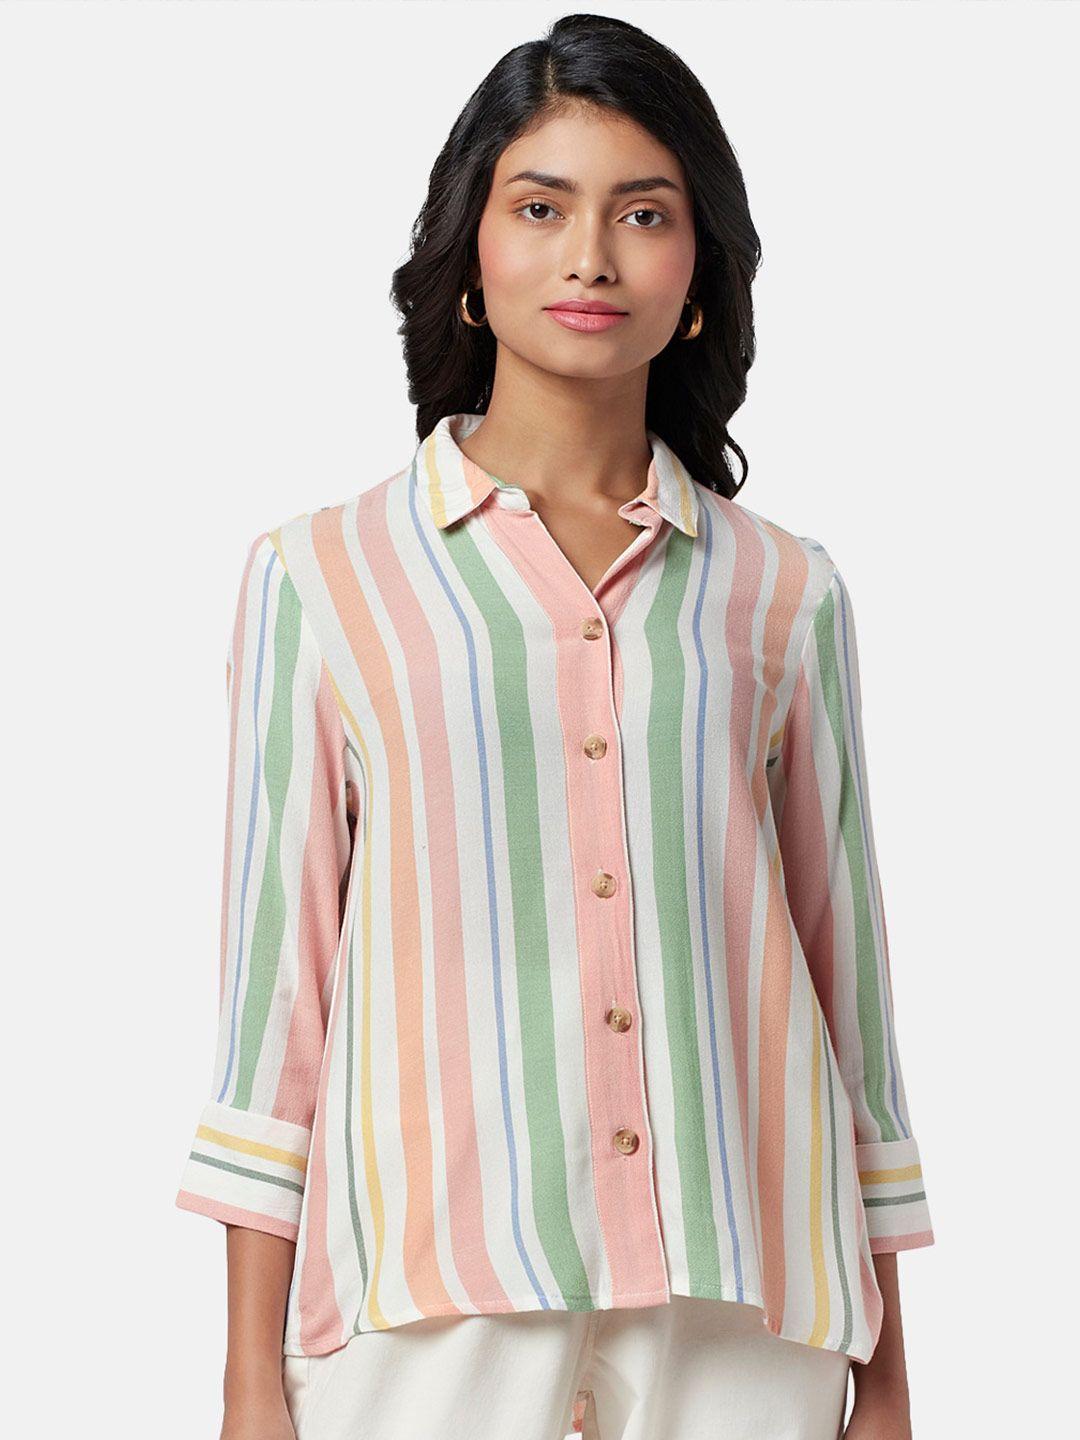 honey-by-pantaloons-striped-casual-shirt